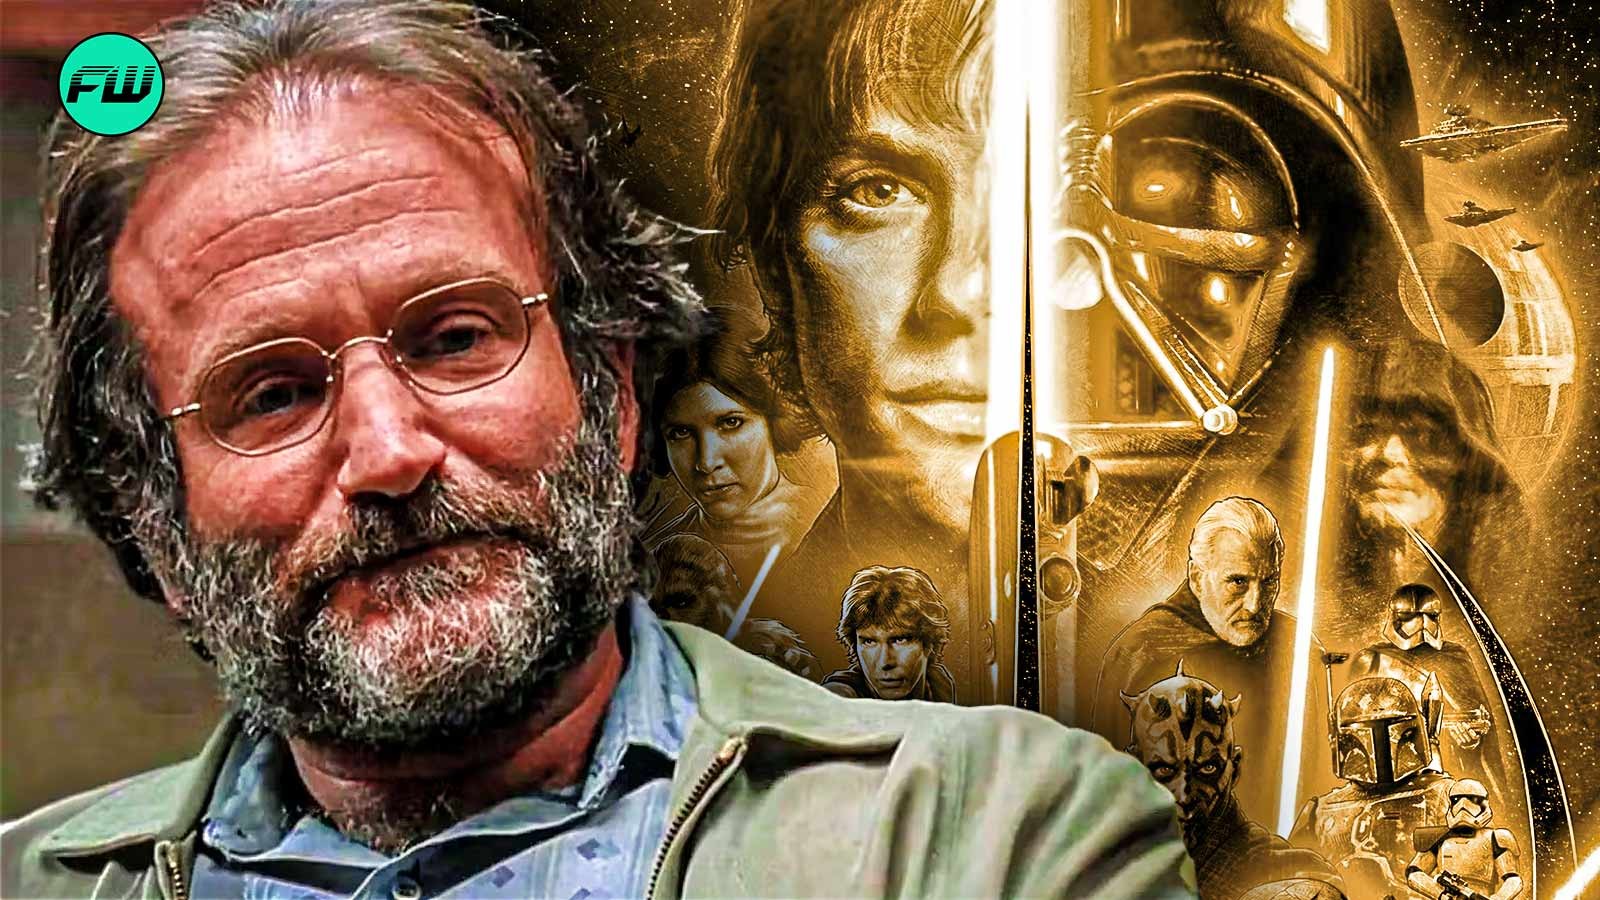 Robin Williams and Star Wars